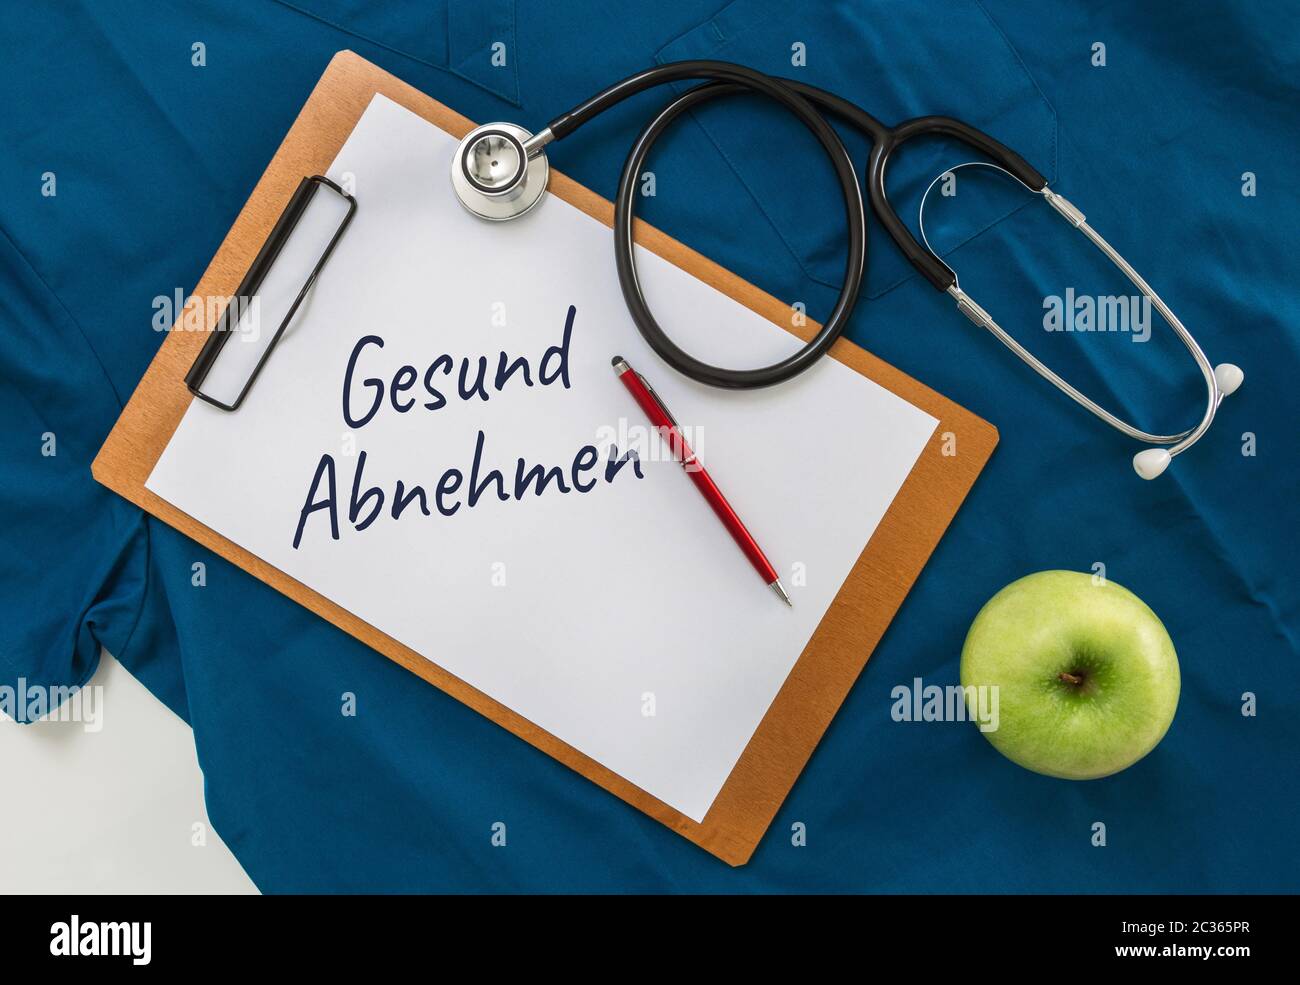 Gesund Abnehmen (in german Healthy Dieting) Clipboard with stethoscope. Stock Photo